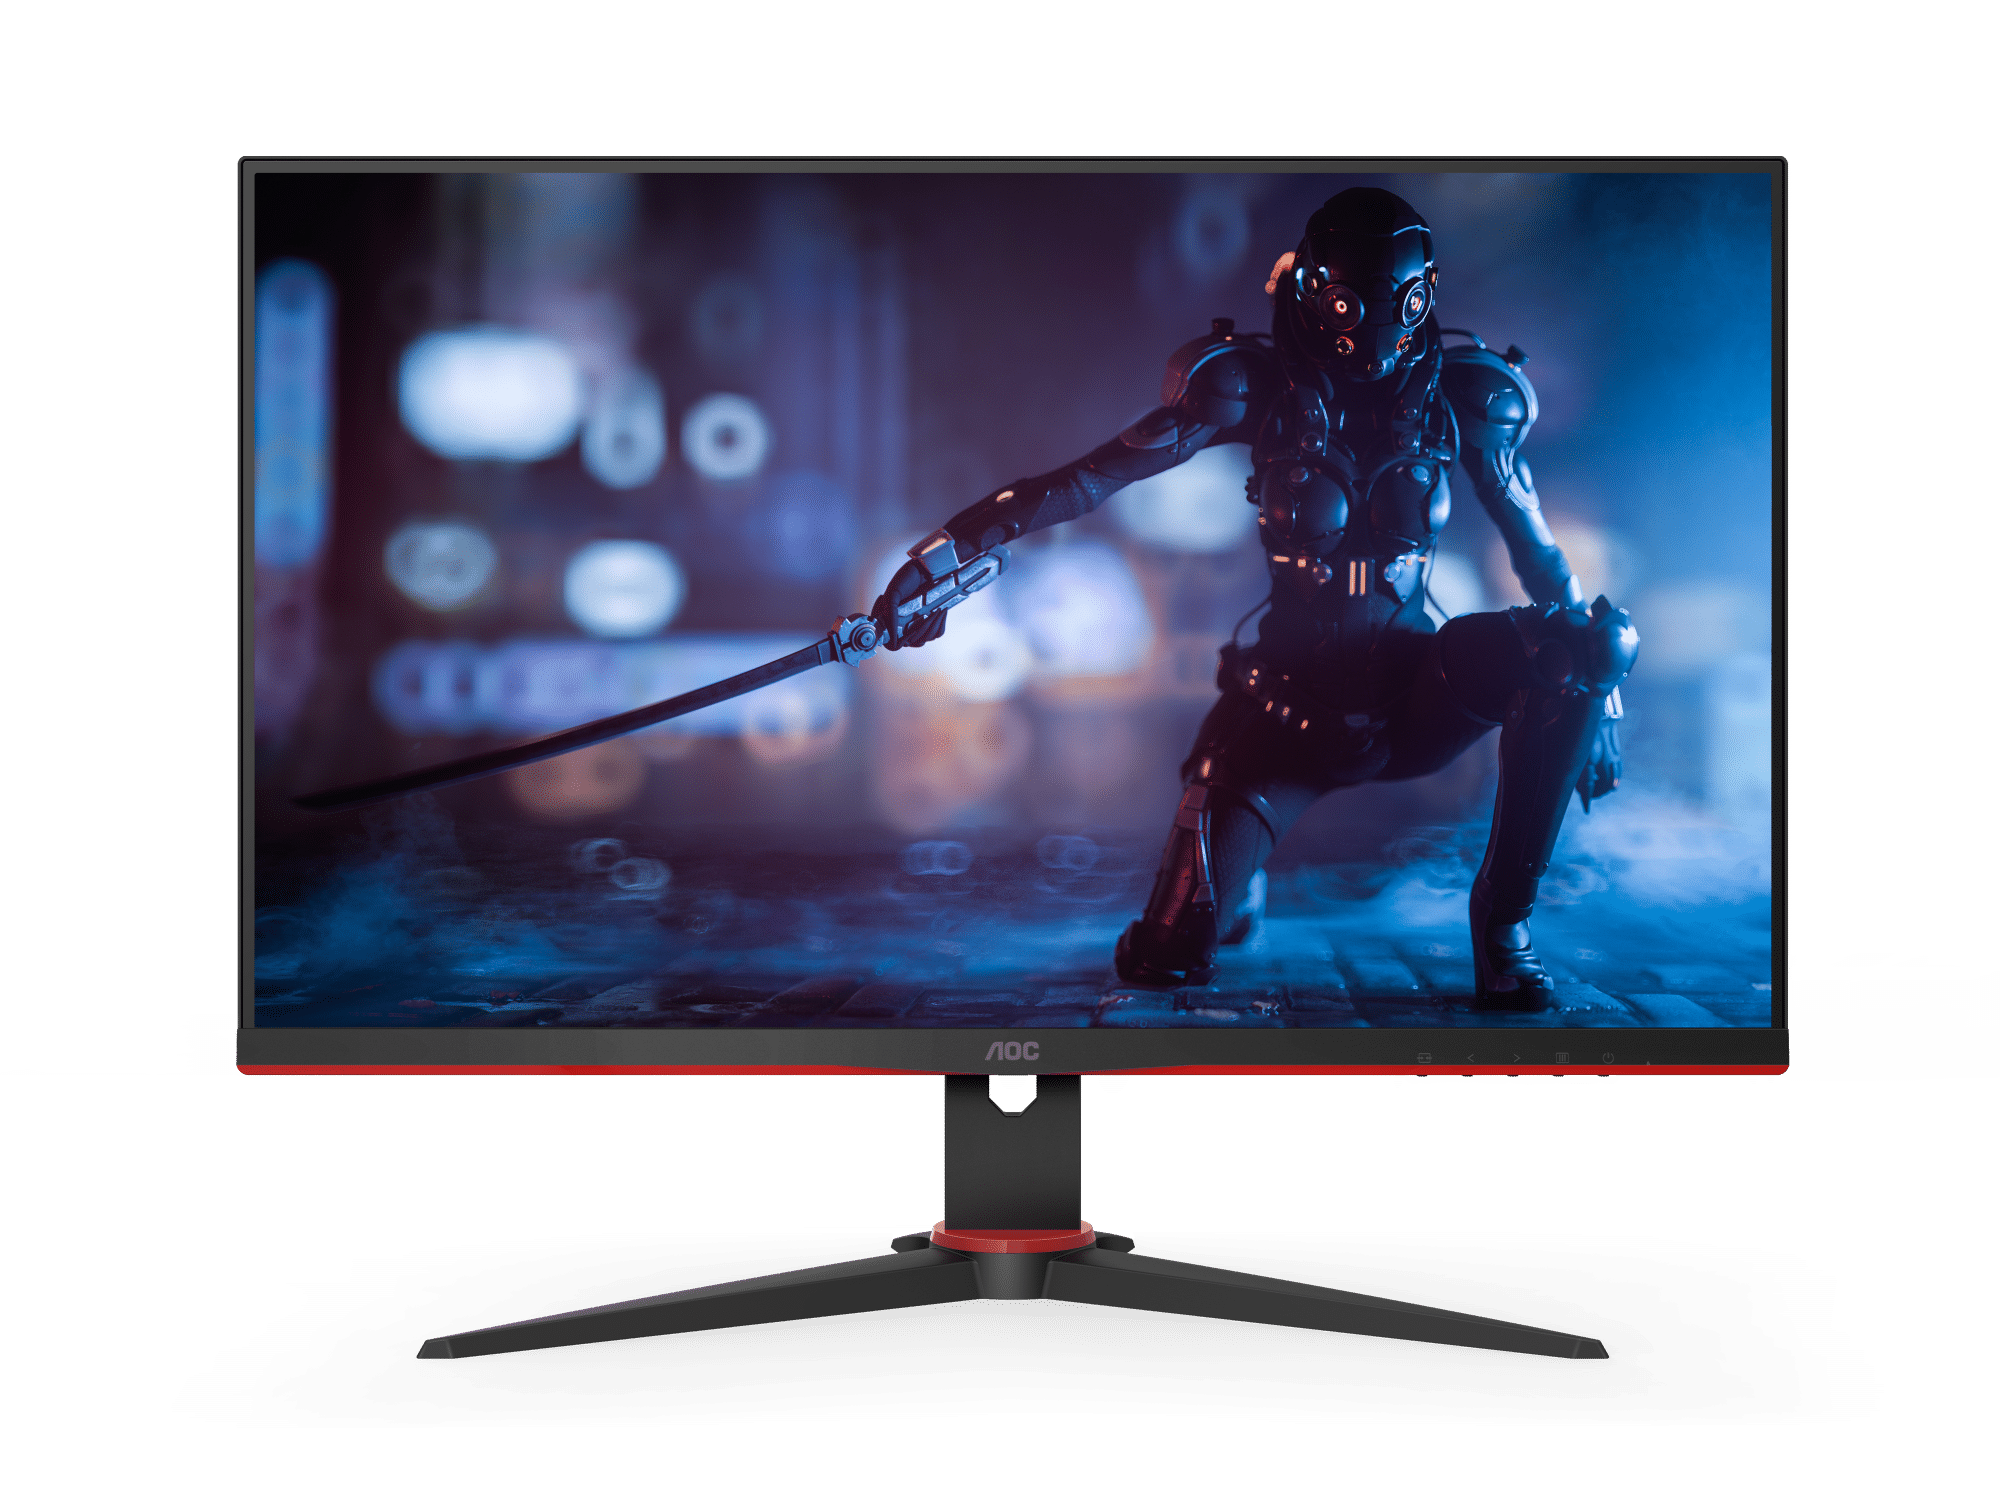 AOC 27G2SE 27 165 Hz Gaming Monitor (Black/Silver/Red) 27G2SE